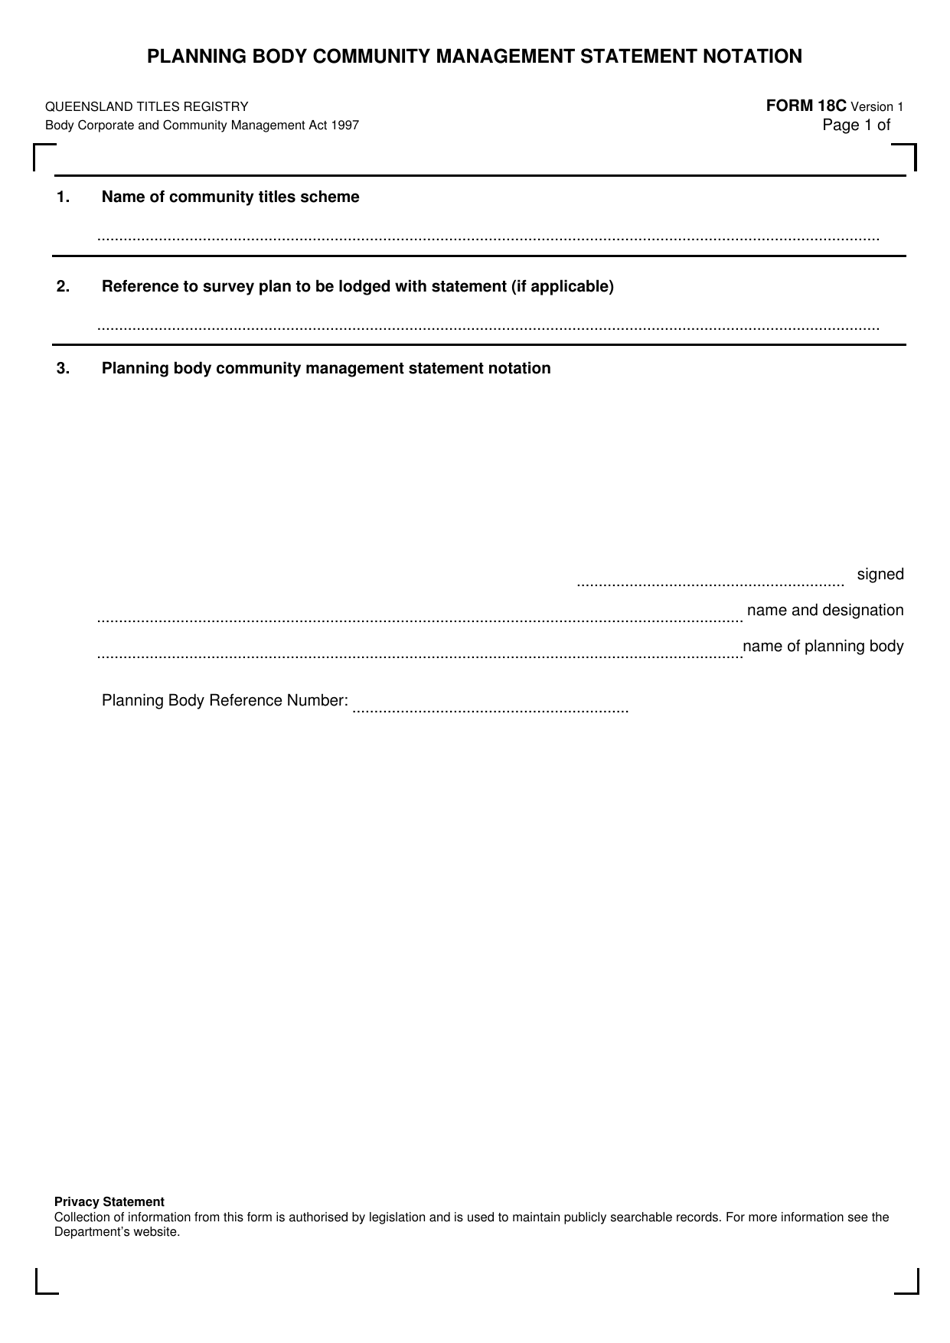 Form 18C Planning Body Community Management Statement Notation - Queensland, Australia, Page 1